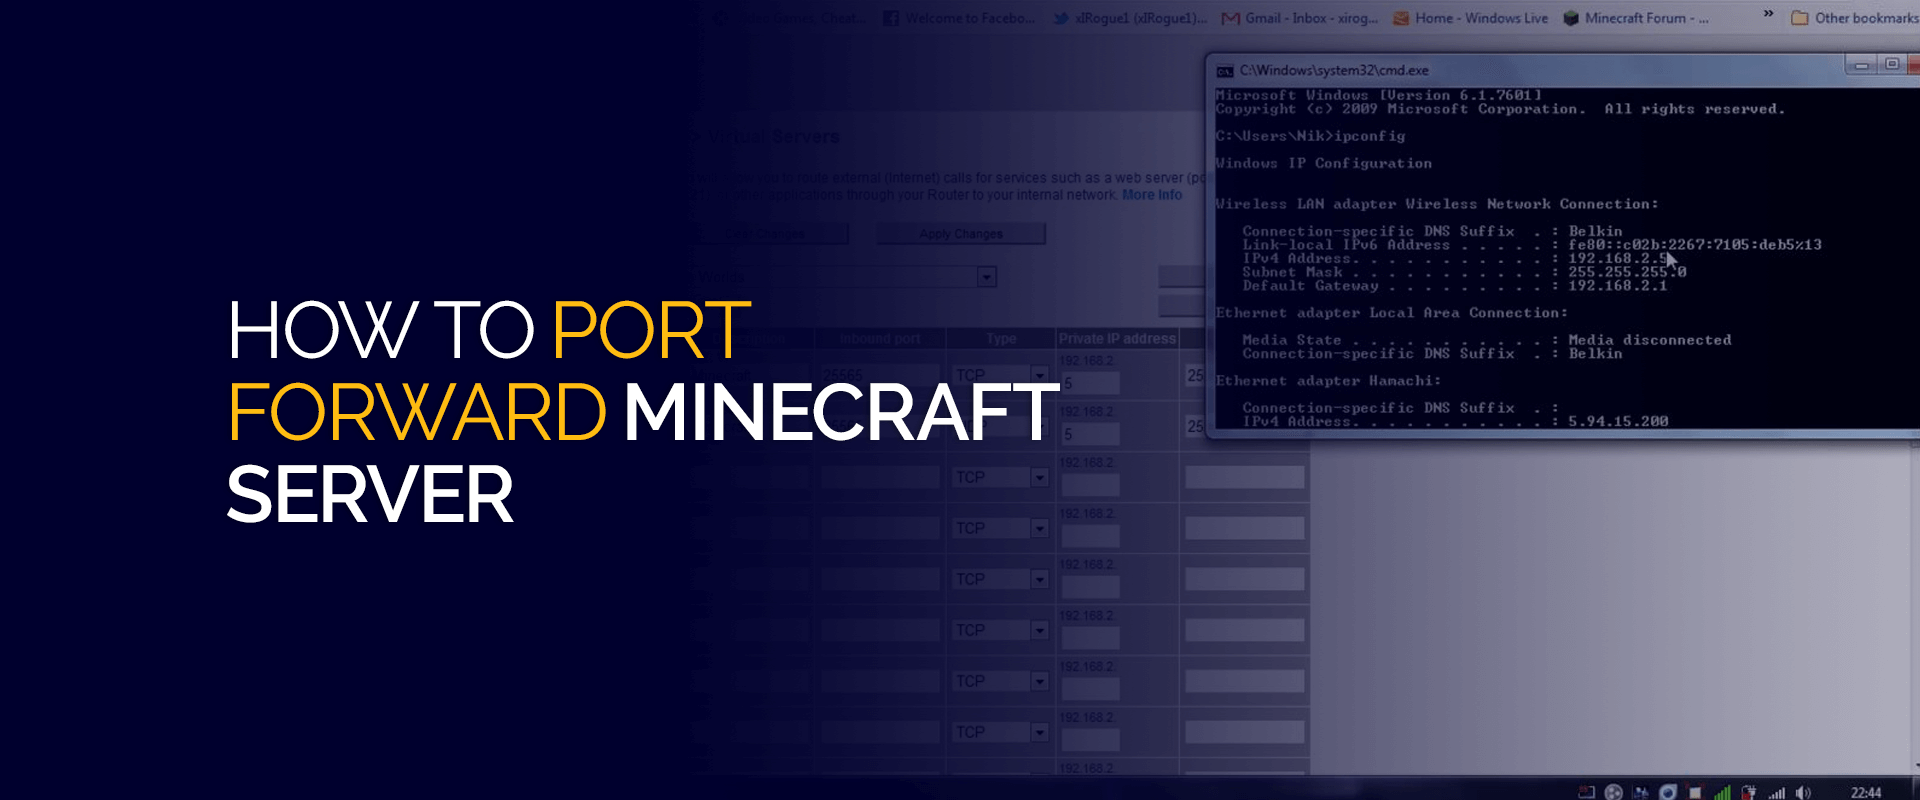 How to Port Forward a Minecraft Server - Step-by-Step